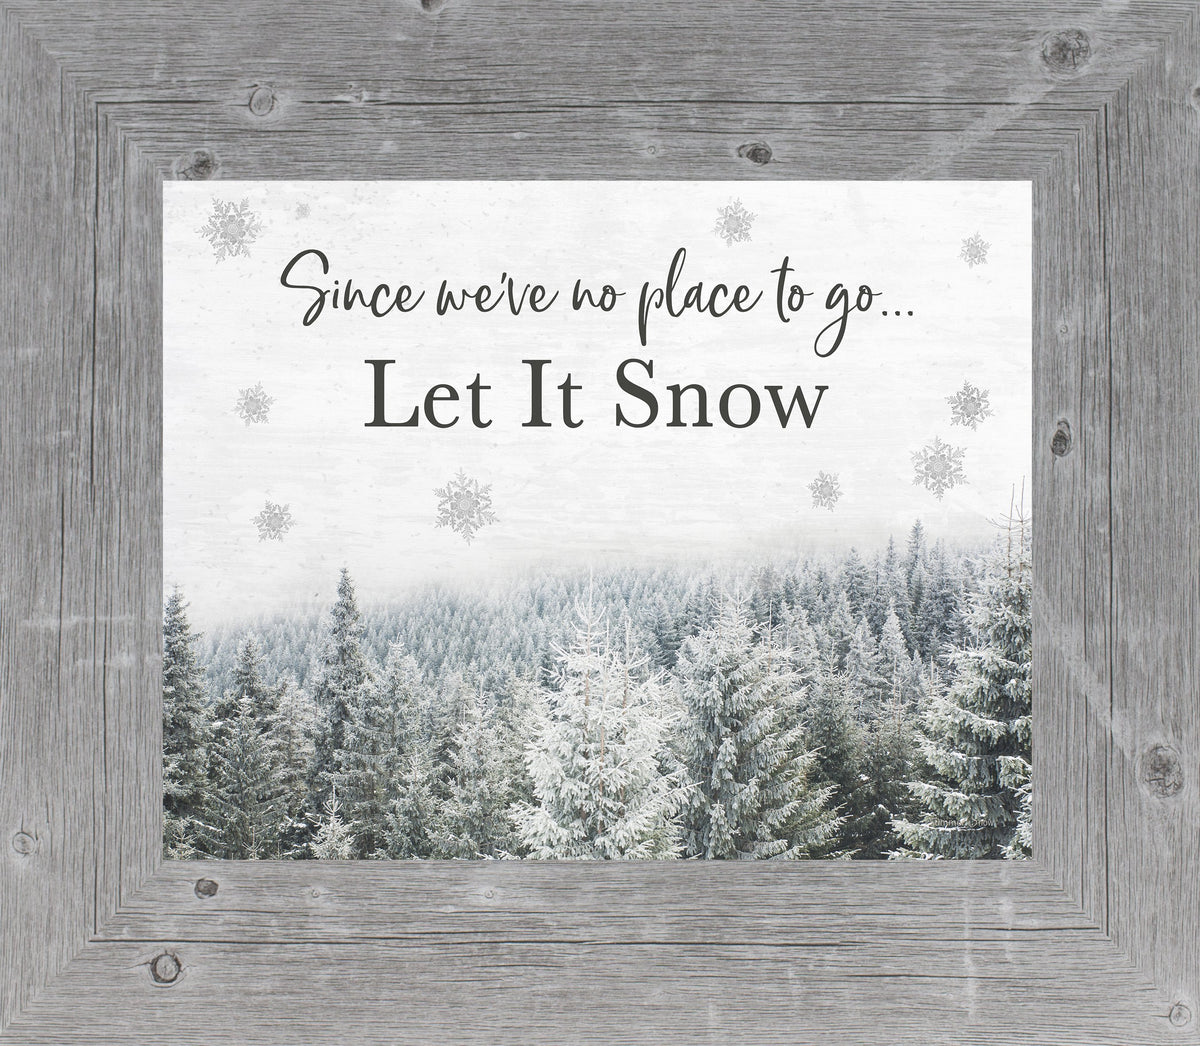 Let It Snow by Summer Snow SS87 - Summer Snow Art